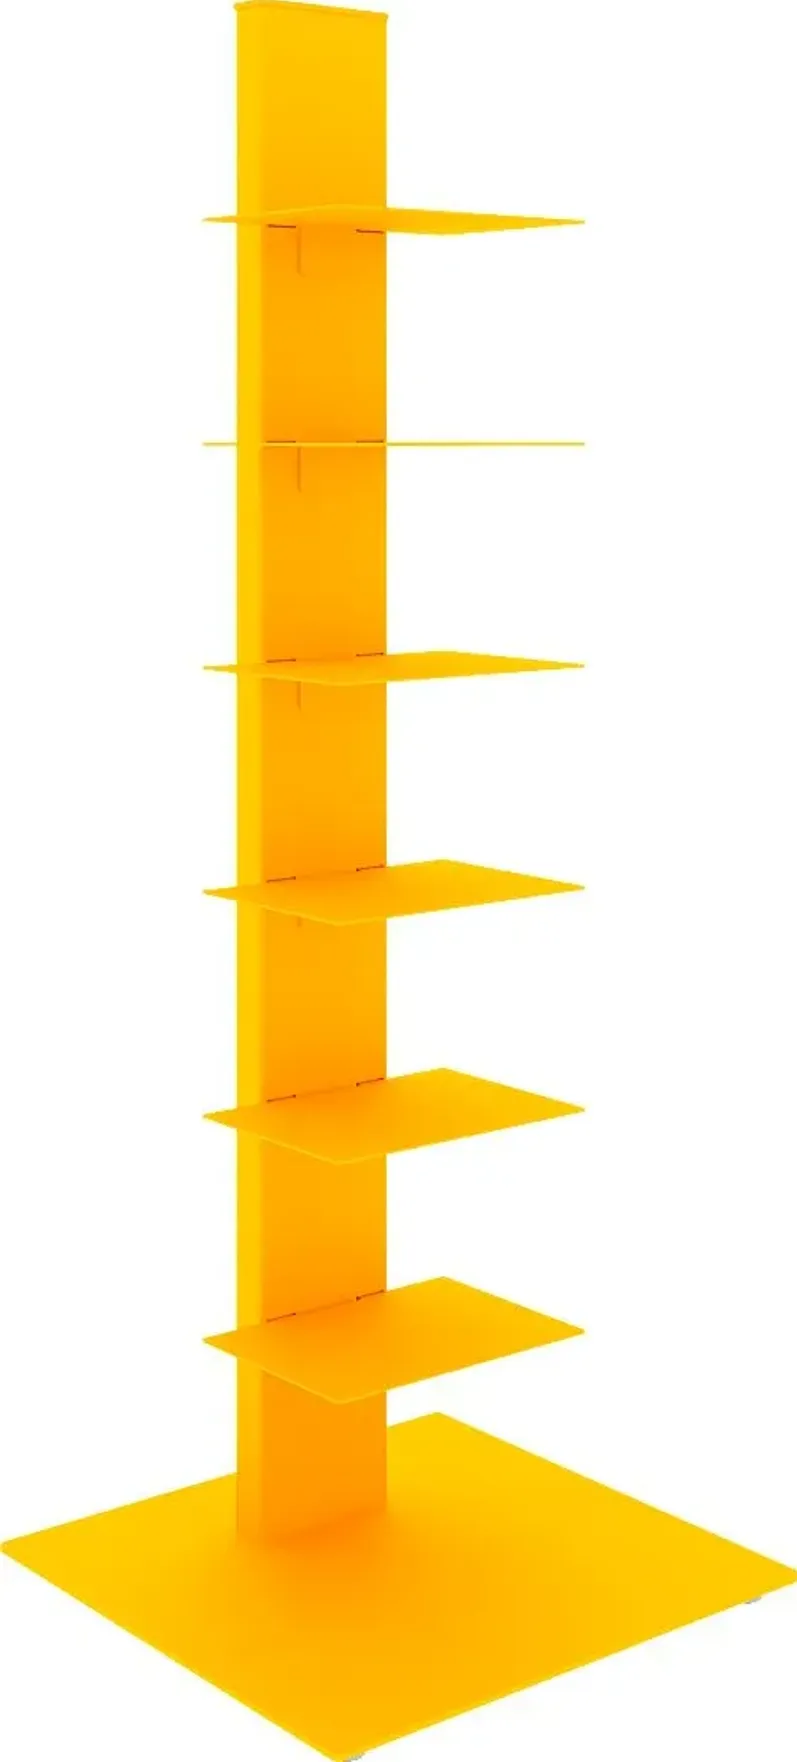 Lukens I Yellow Bookcase Tower